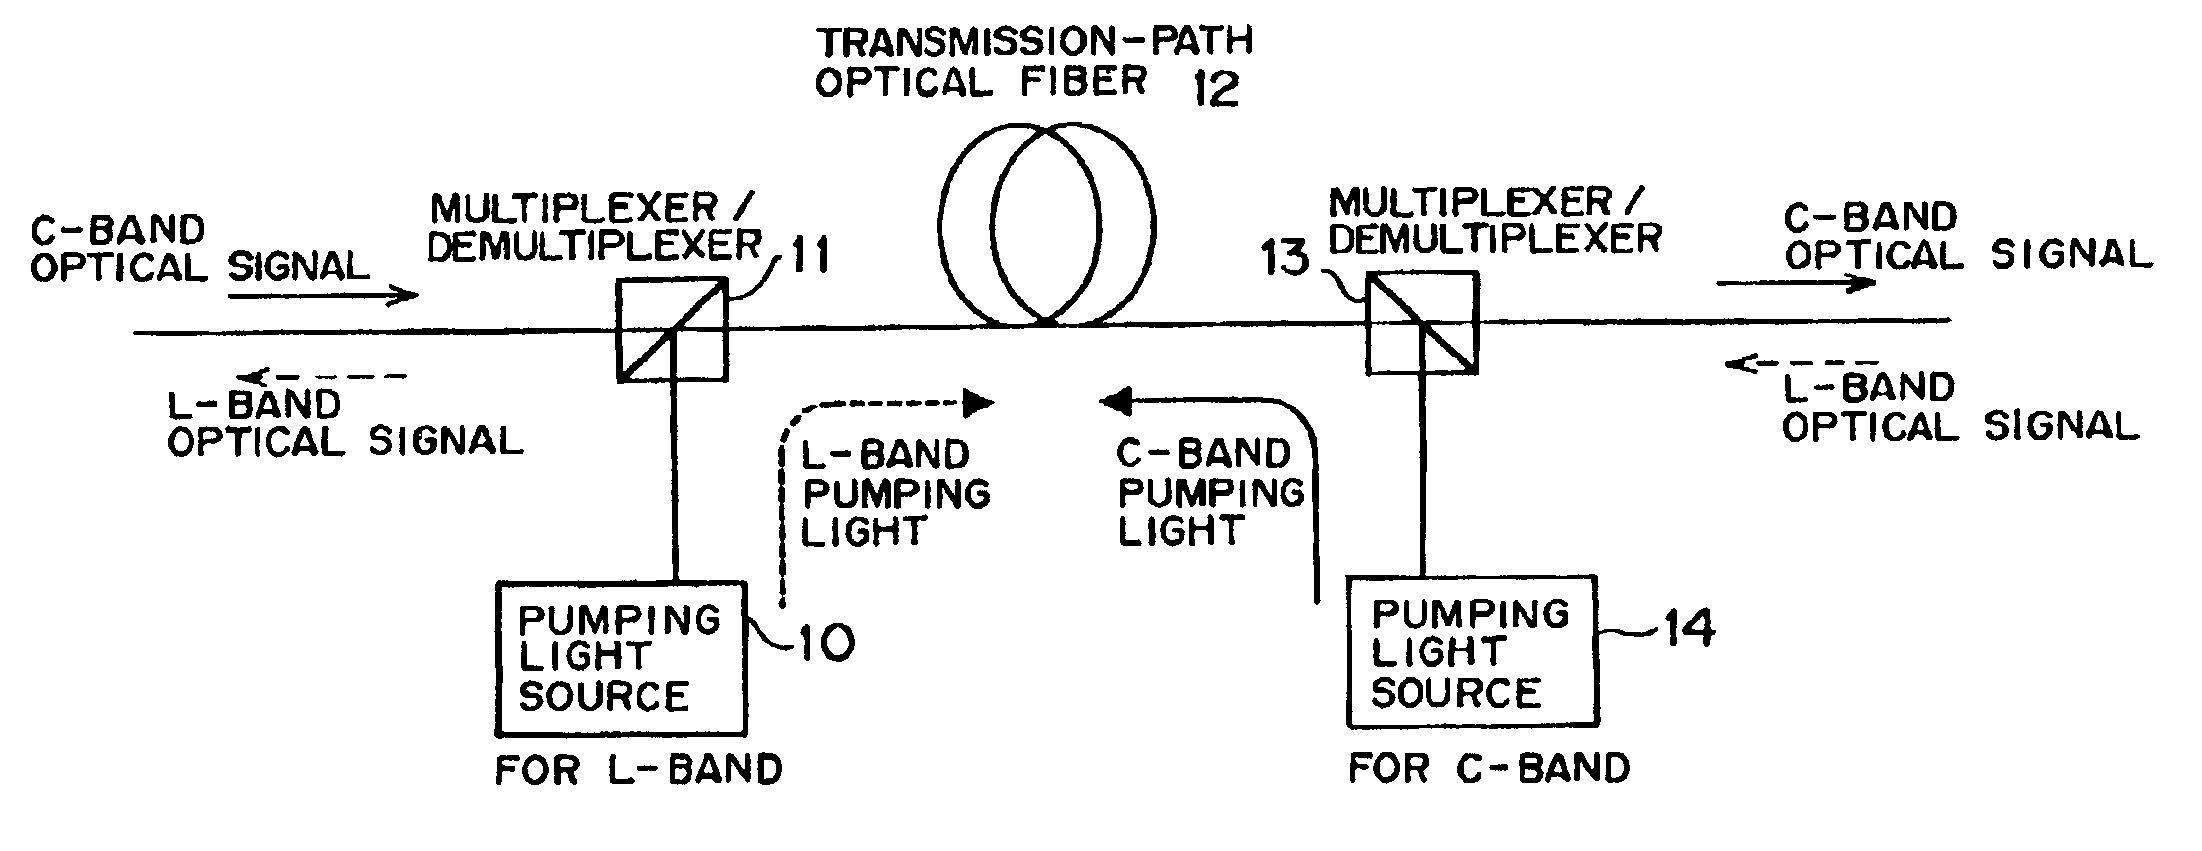 Bidirectionally transmittable optical wavelength division multiplexed transmission system